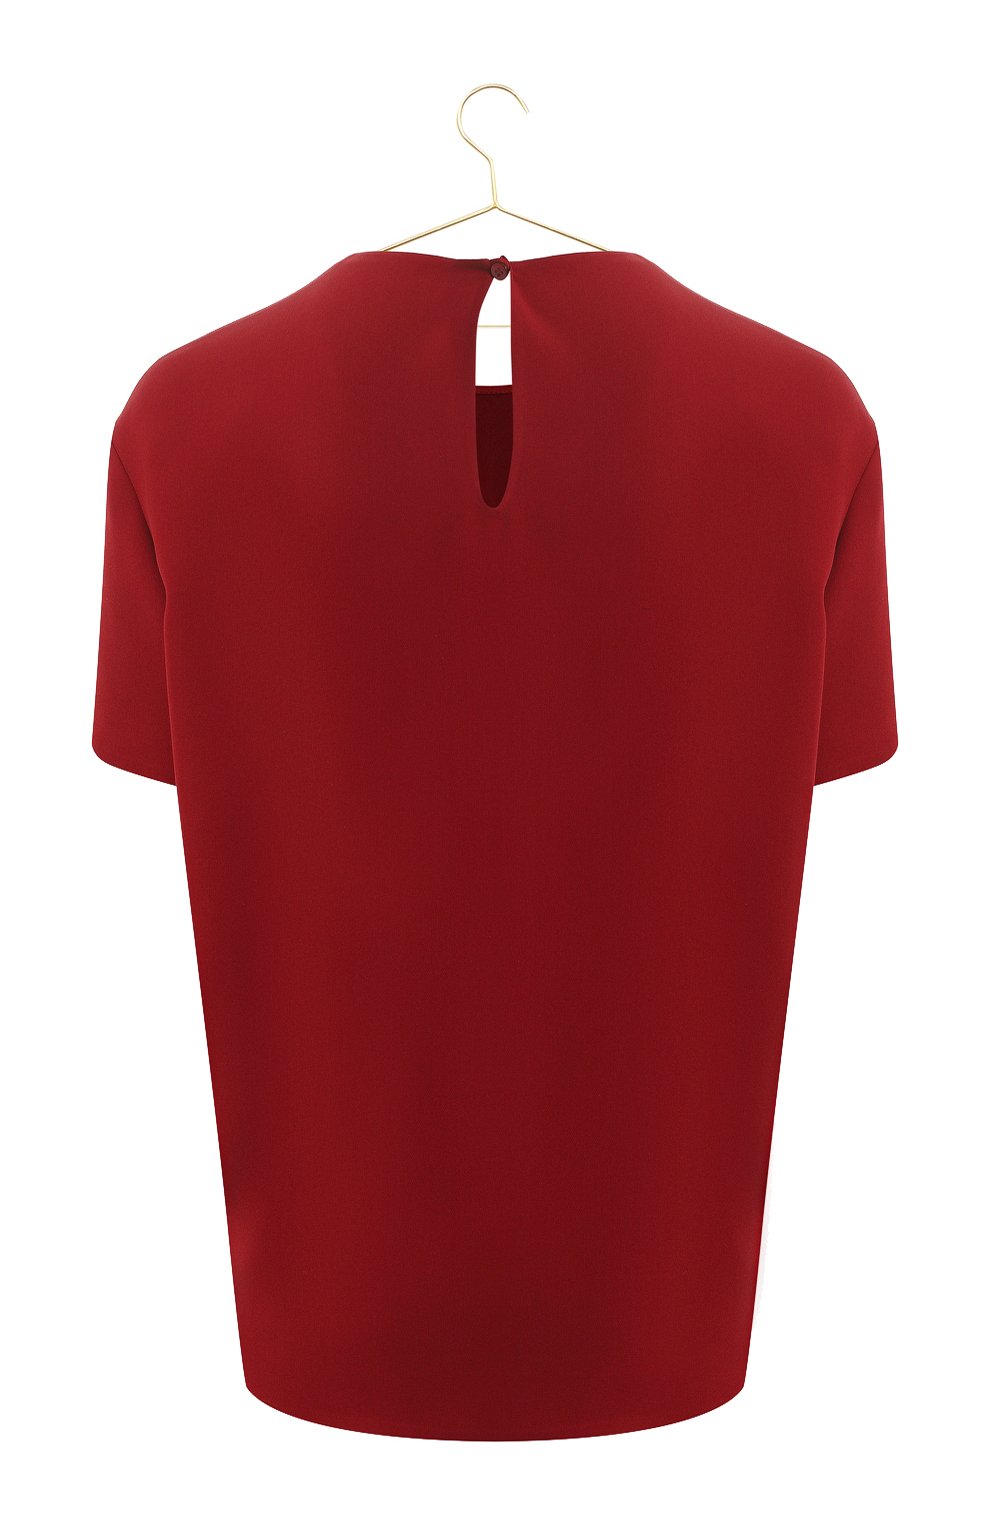 Шелковая блузка | Valentino | Бордовый - 2